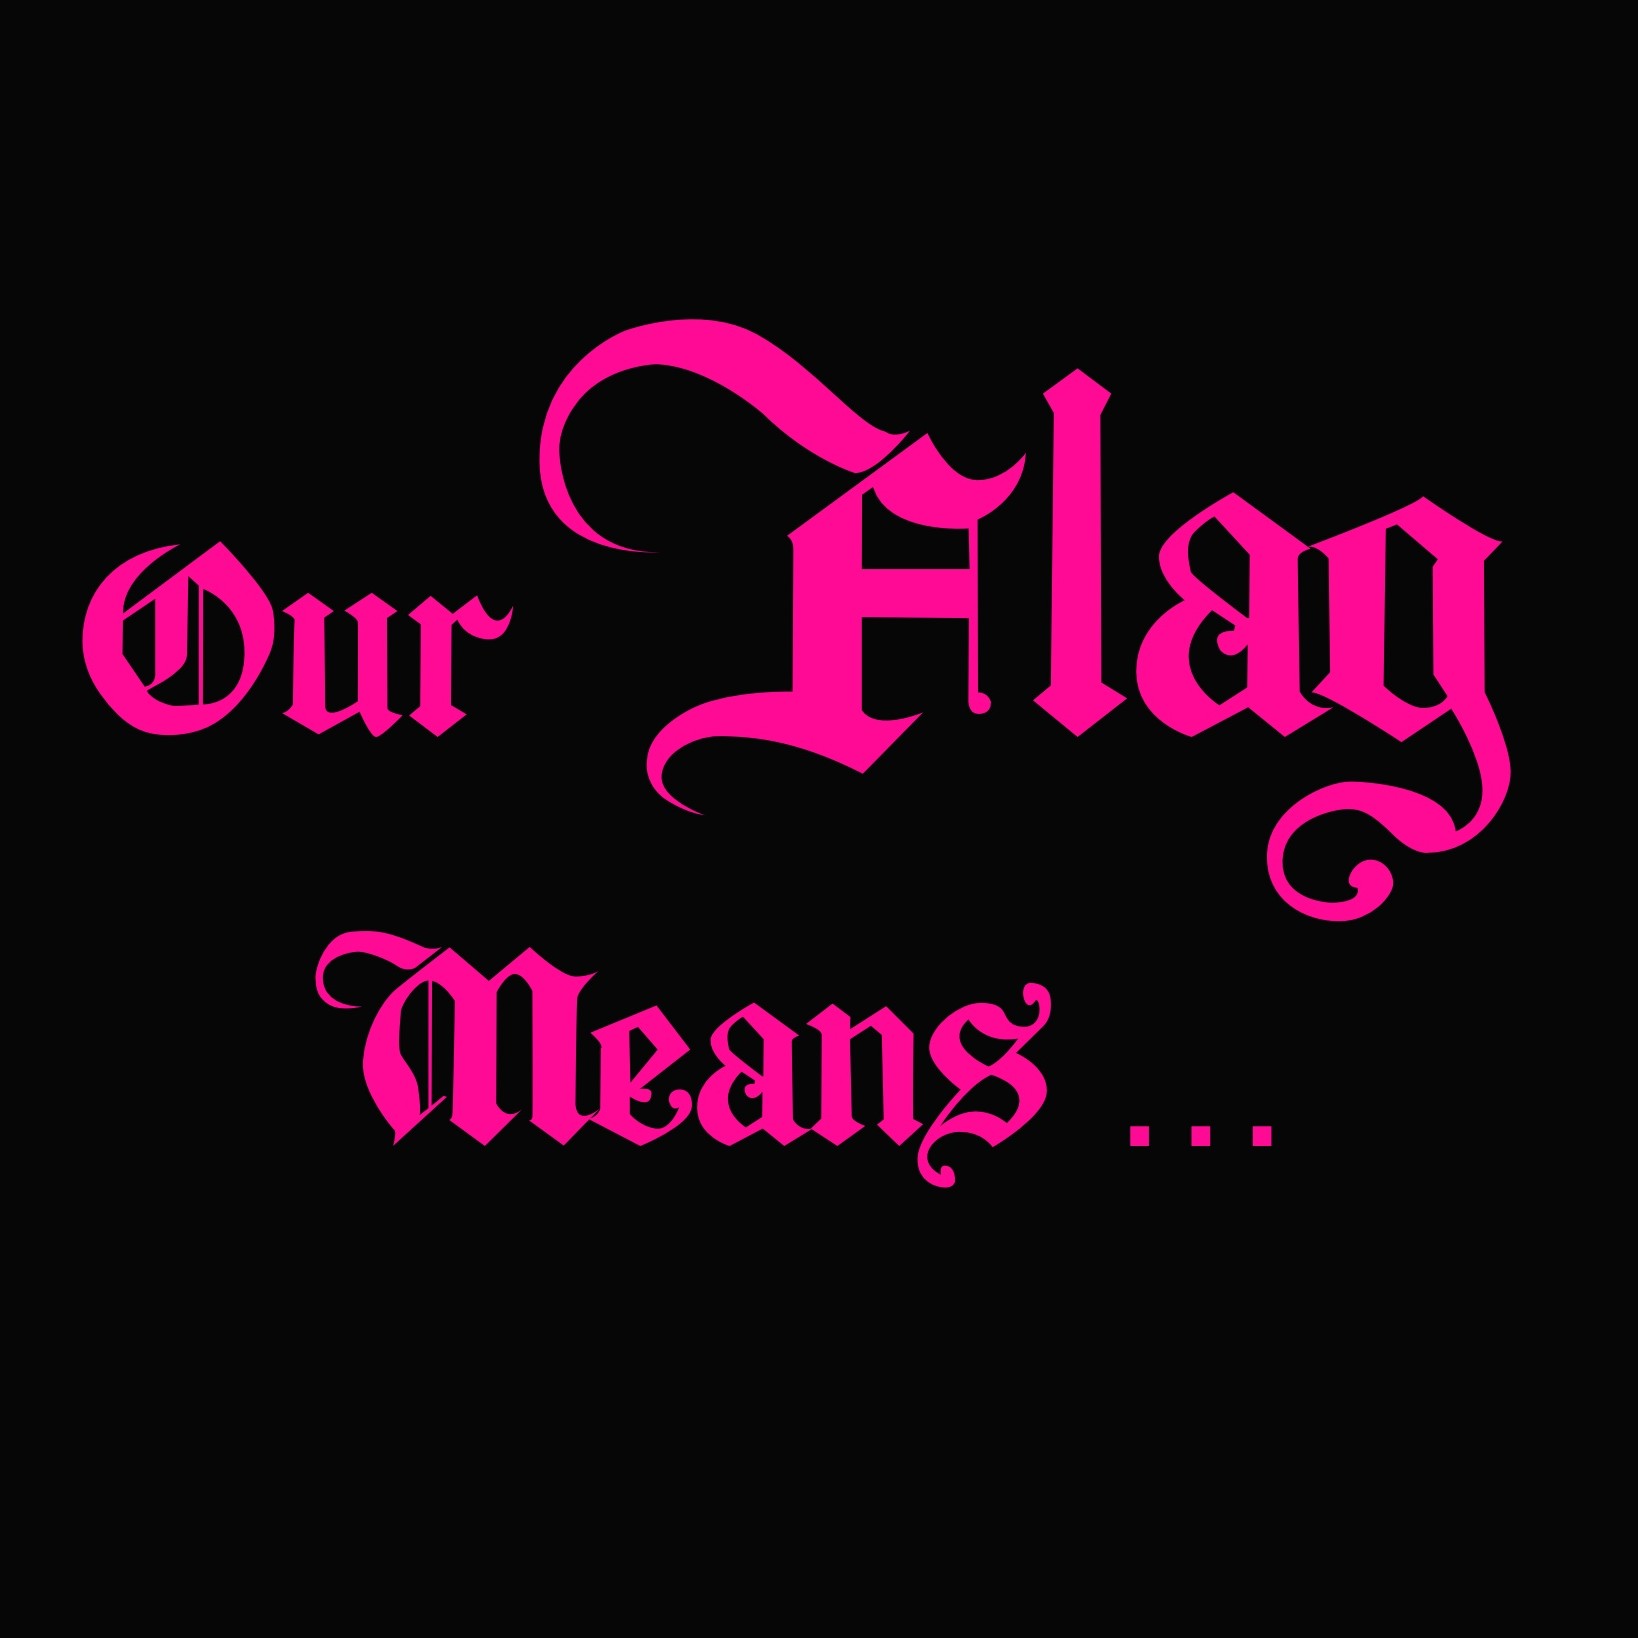 Our Flag Means… | An Our Flag Means Death Podcast